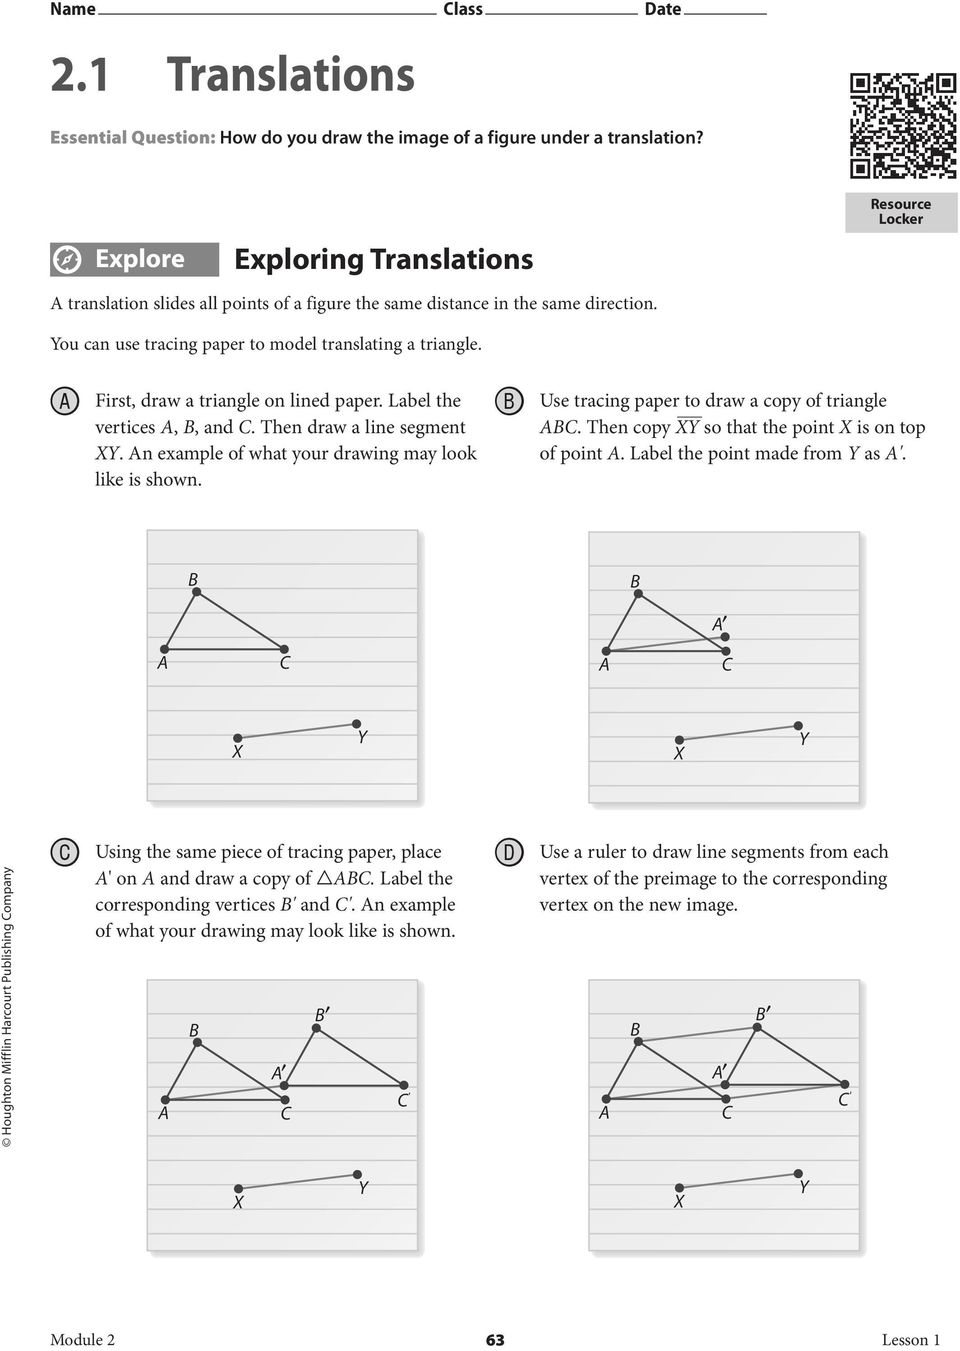 2.1 Translations Homework Answer Key